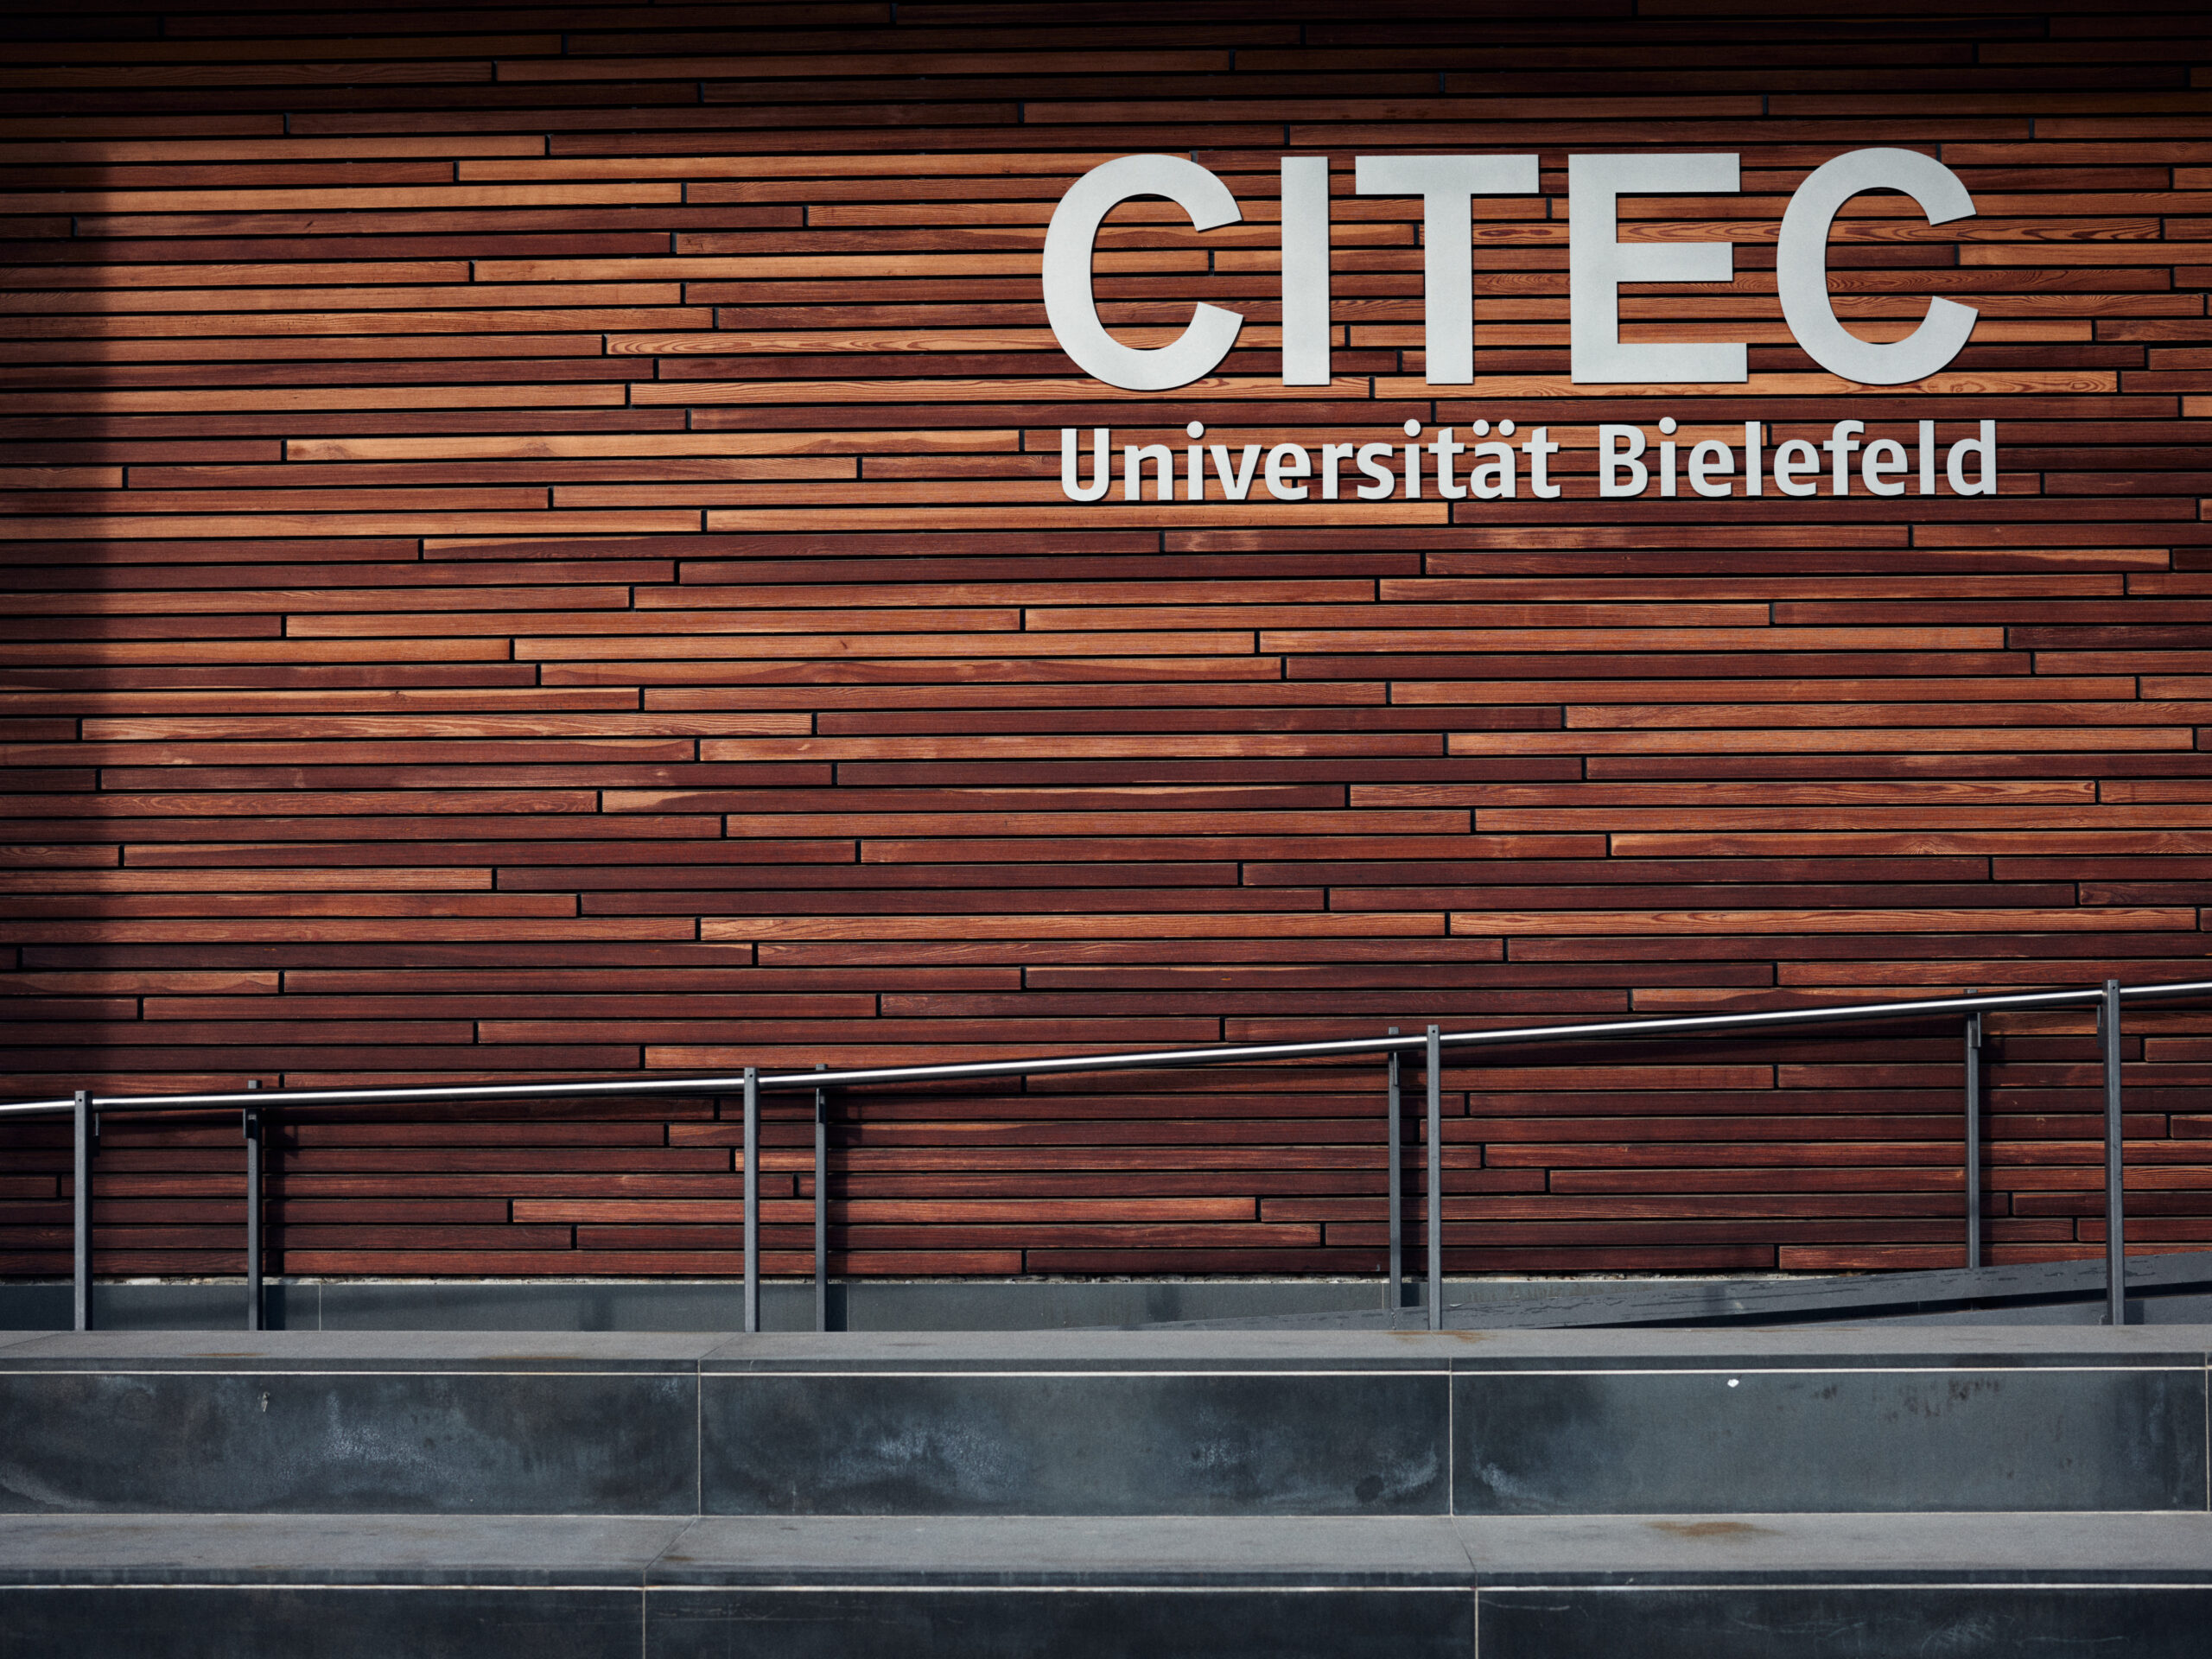 CITEC at Bielefeld University.